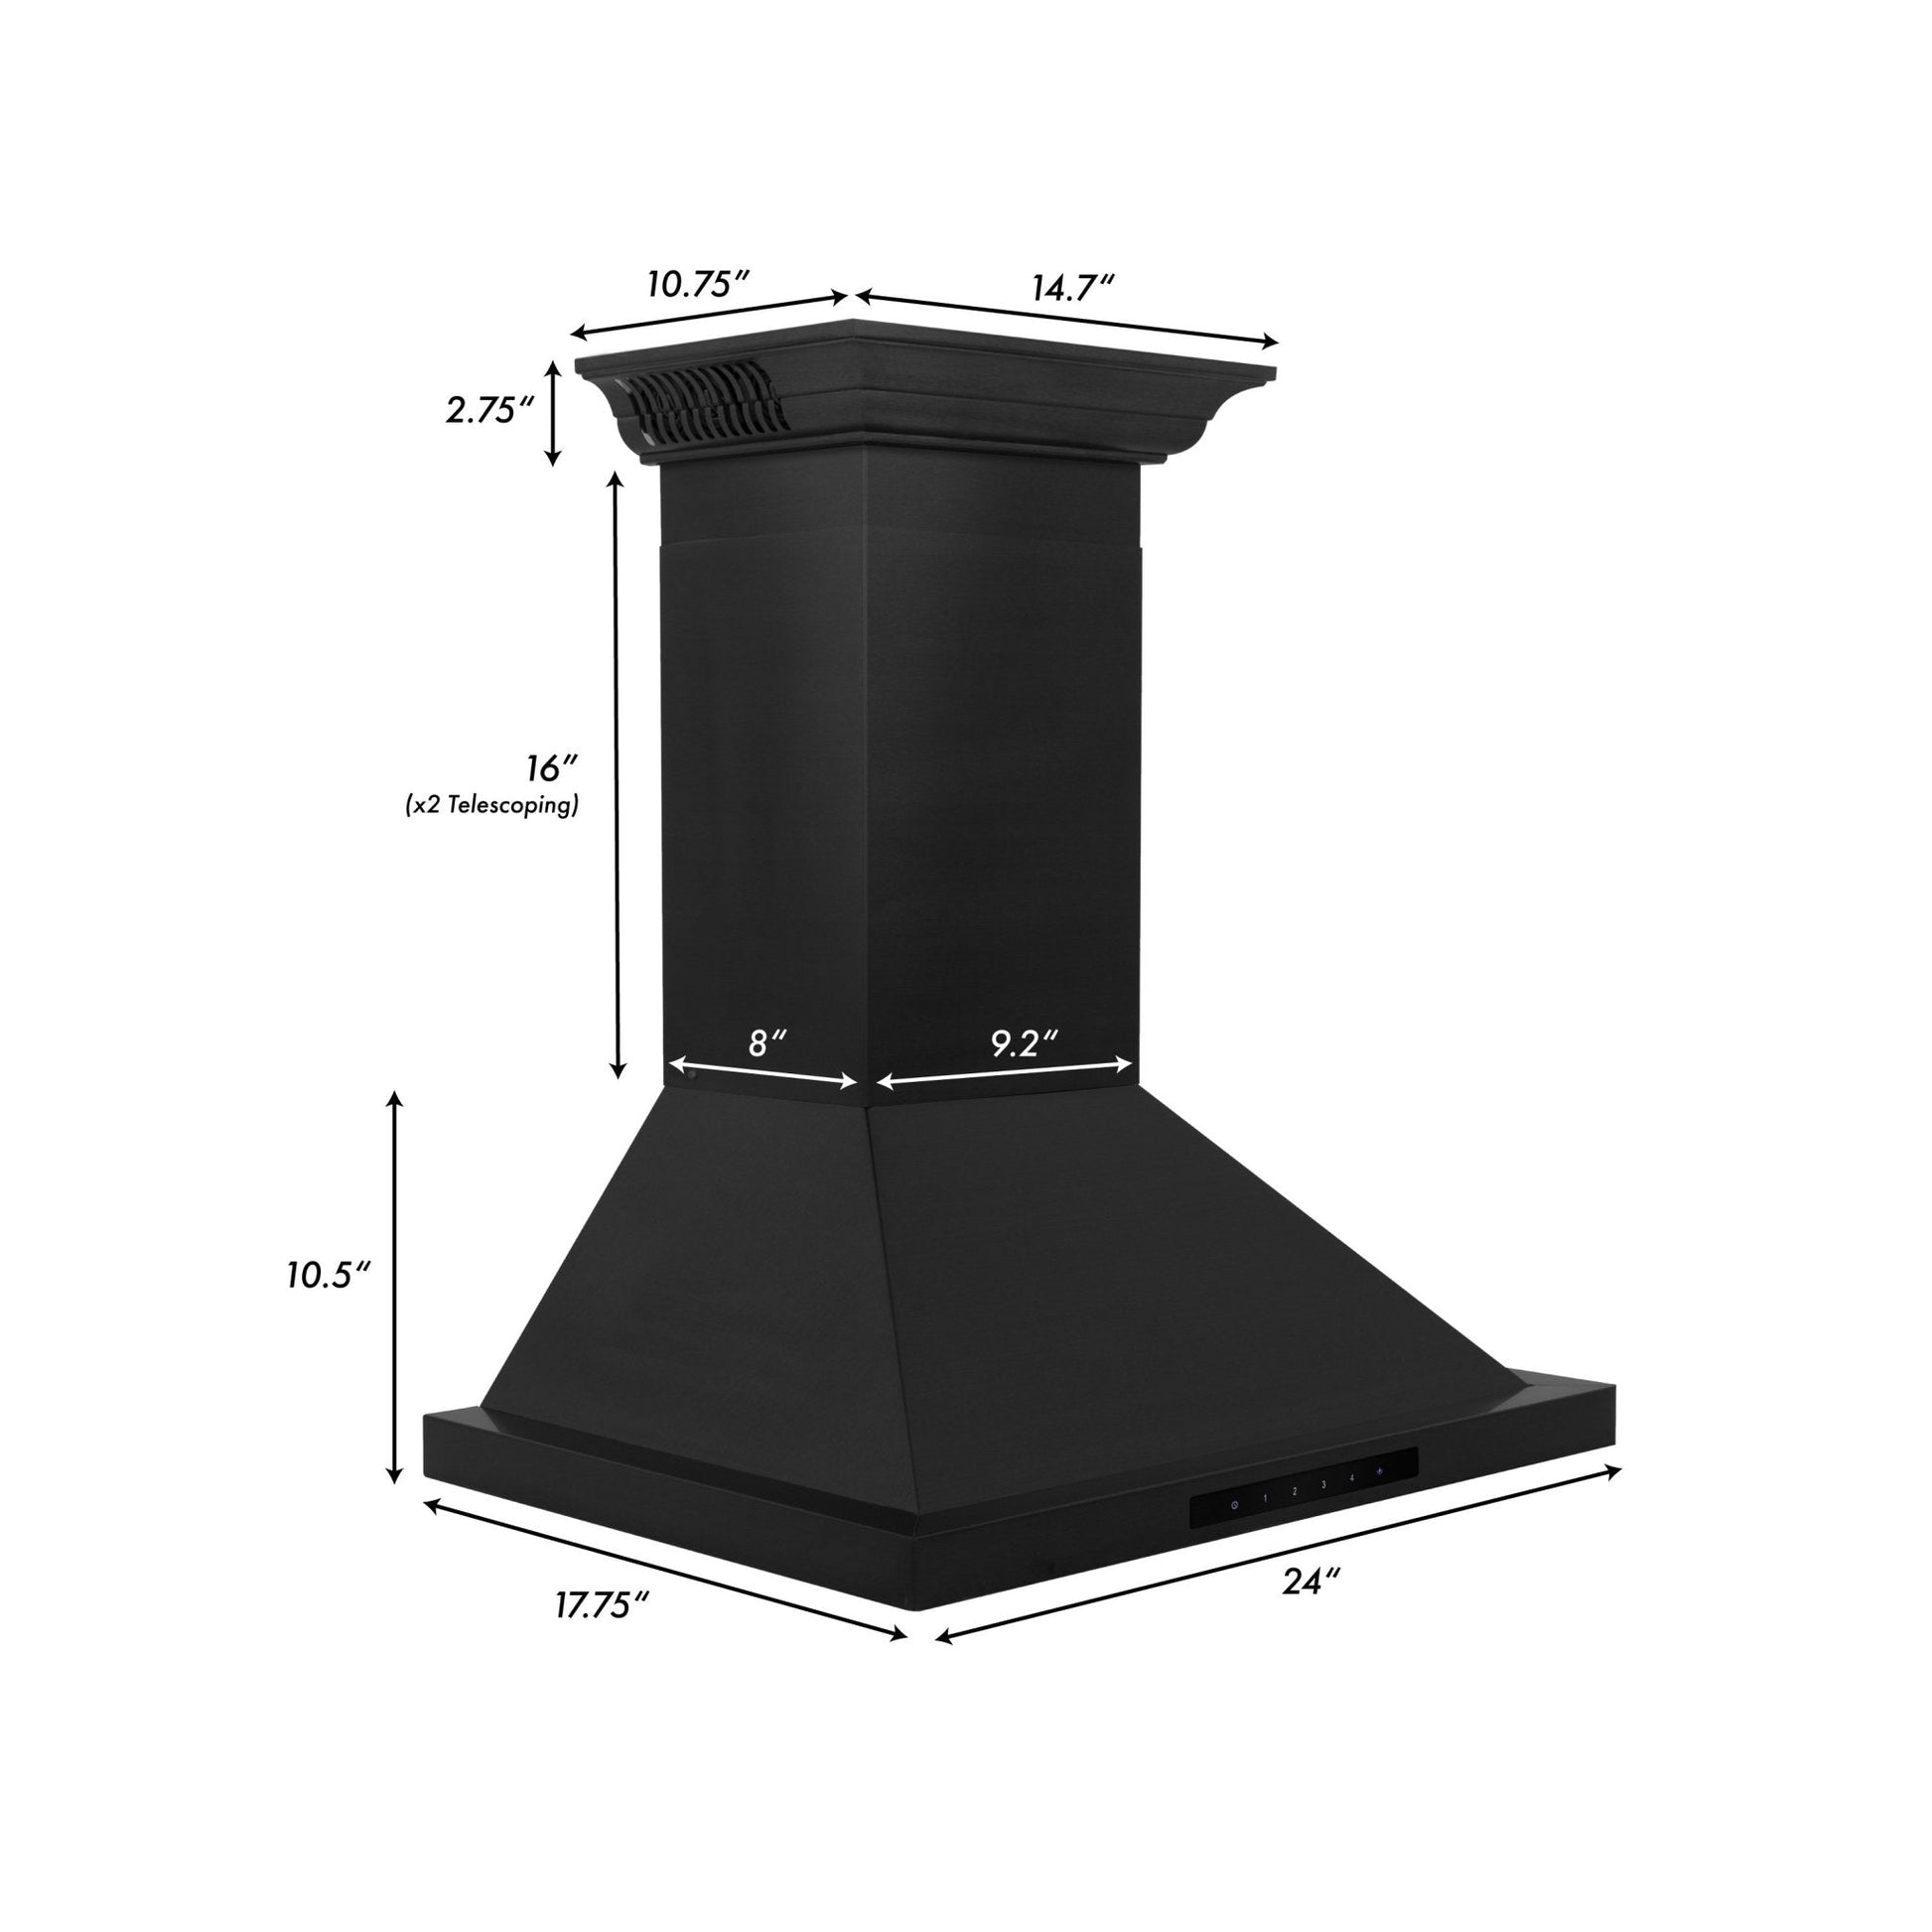 ZLINE Ducted Vent Wall Mount Range Hood in Black Stainless Steel with Built-in ZLINE CrownSound Bluetooth Speakers (BSKBNCRN-BT) dimensional diagram.